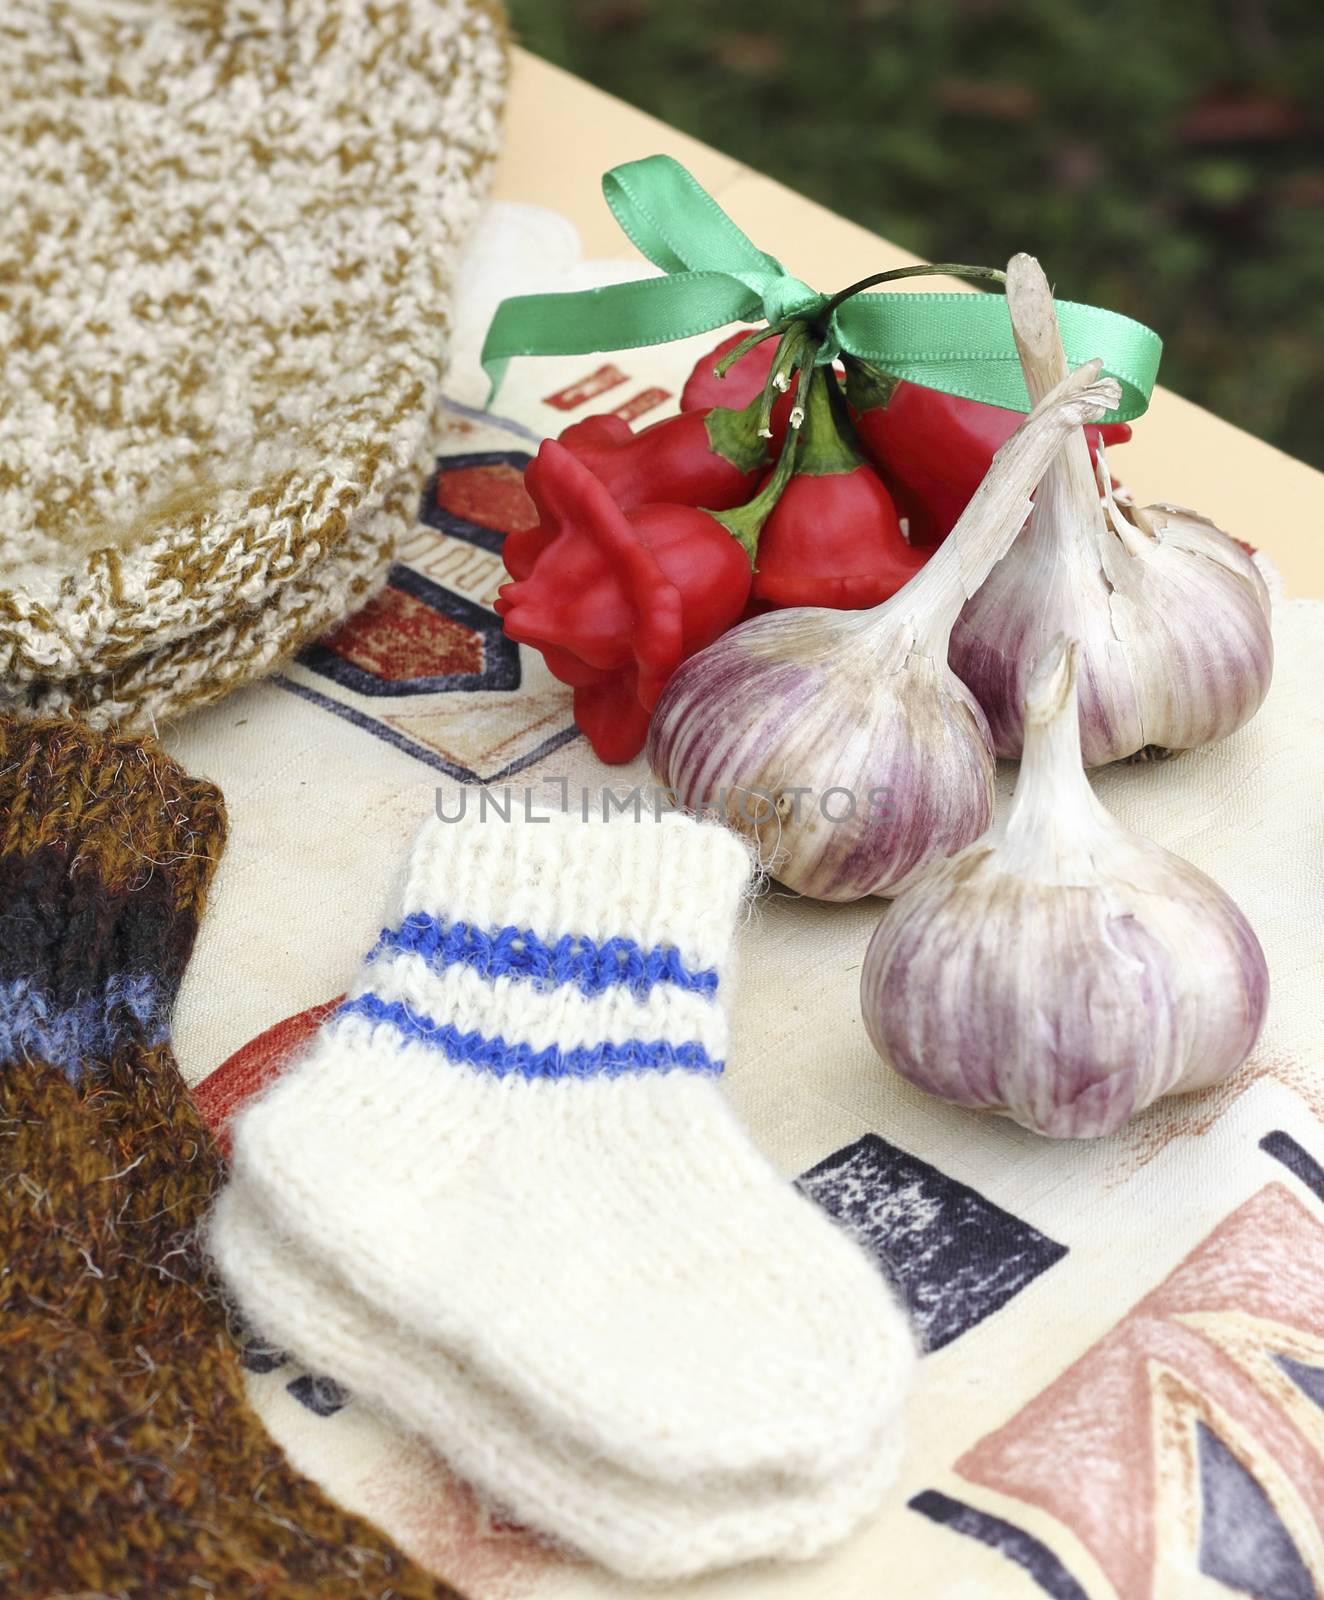 preparing for winter - woolen knitted baby socks and organic grown garlic